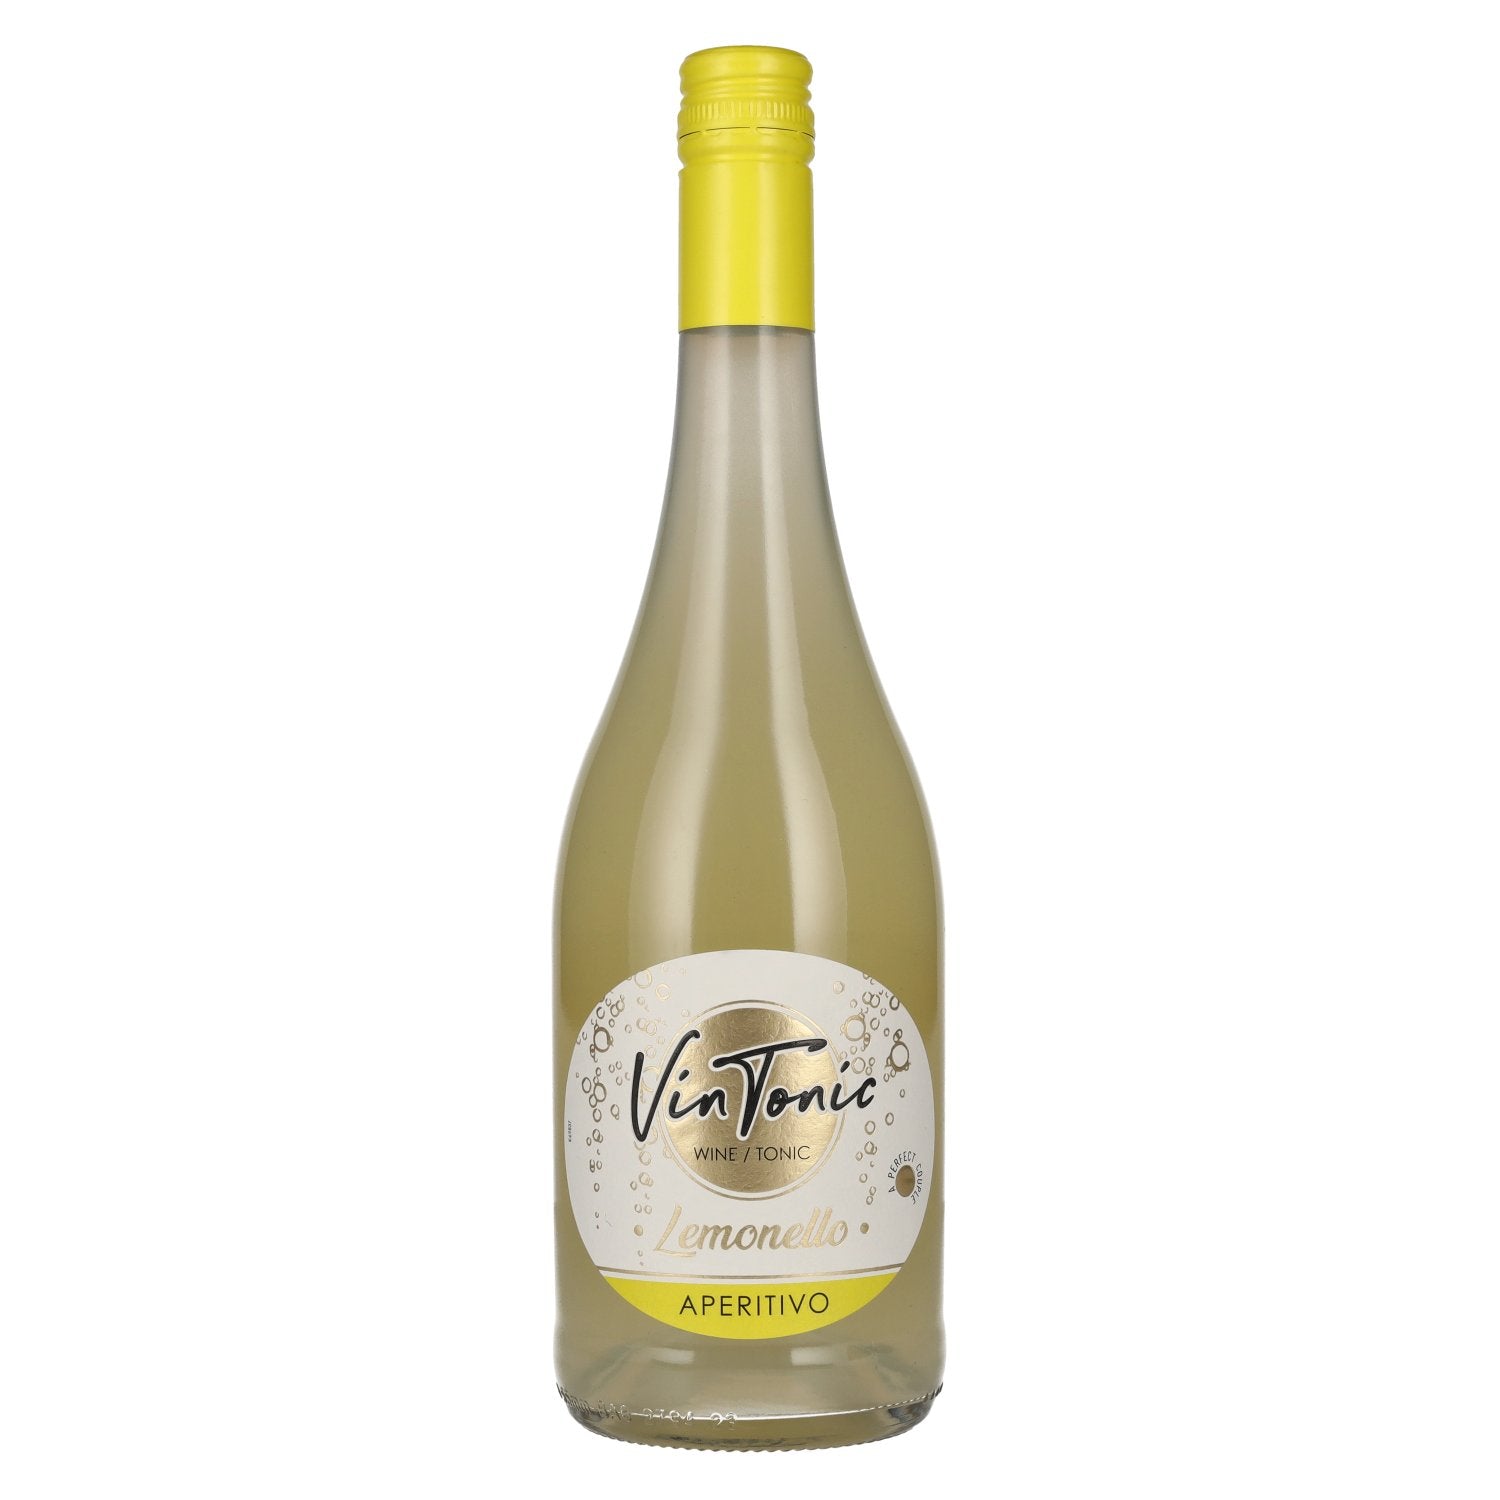 VinTonic Lemonello Aperitivo 5,5% Vol. 0,75l